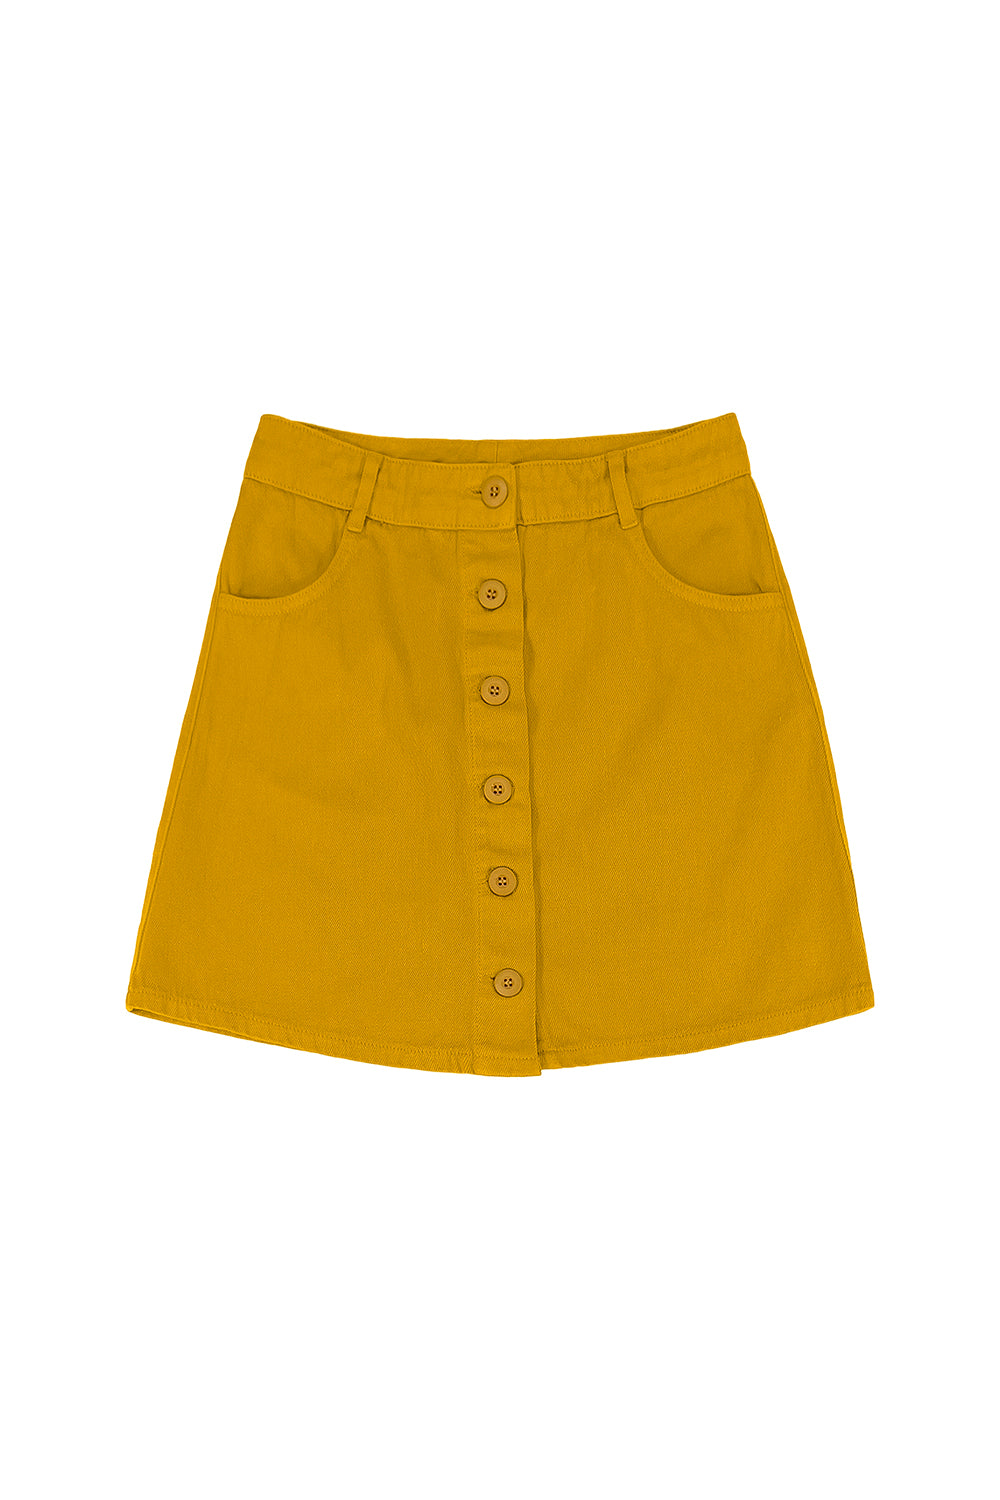 Vassar Skirt | Jungmaven Hemp Clothing & Accessories / Color: Spicy Mustard